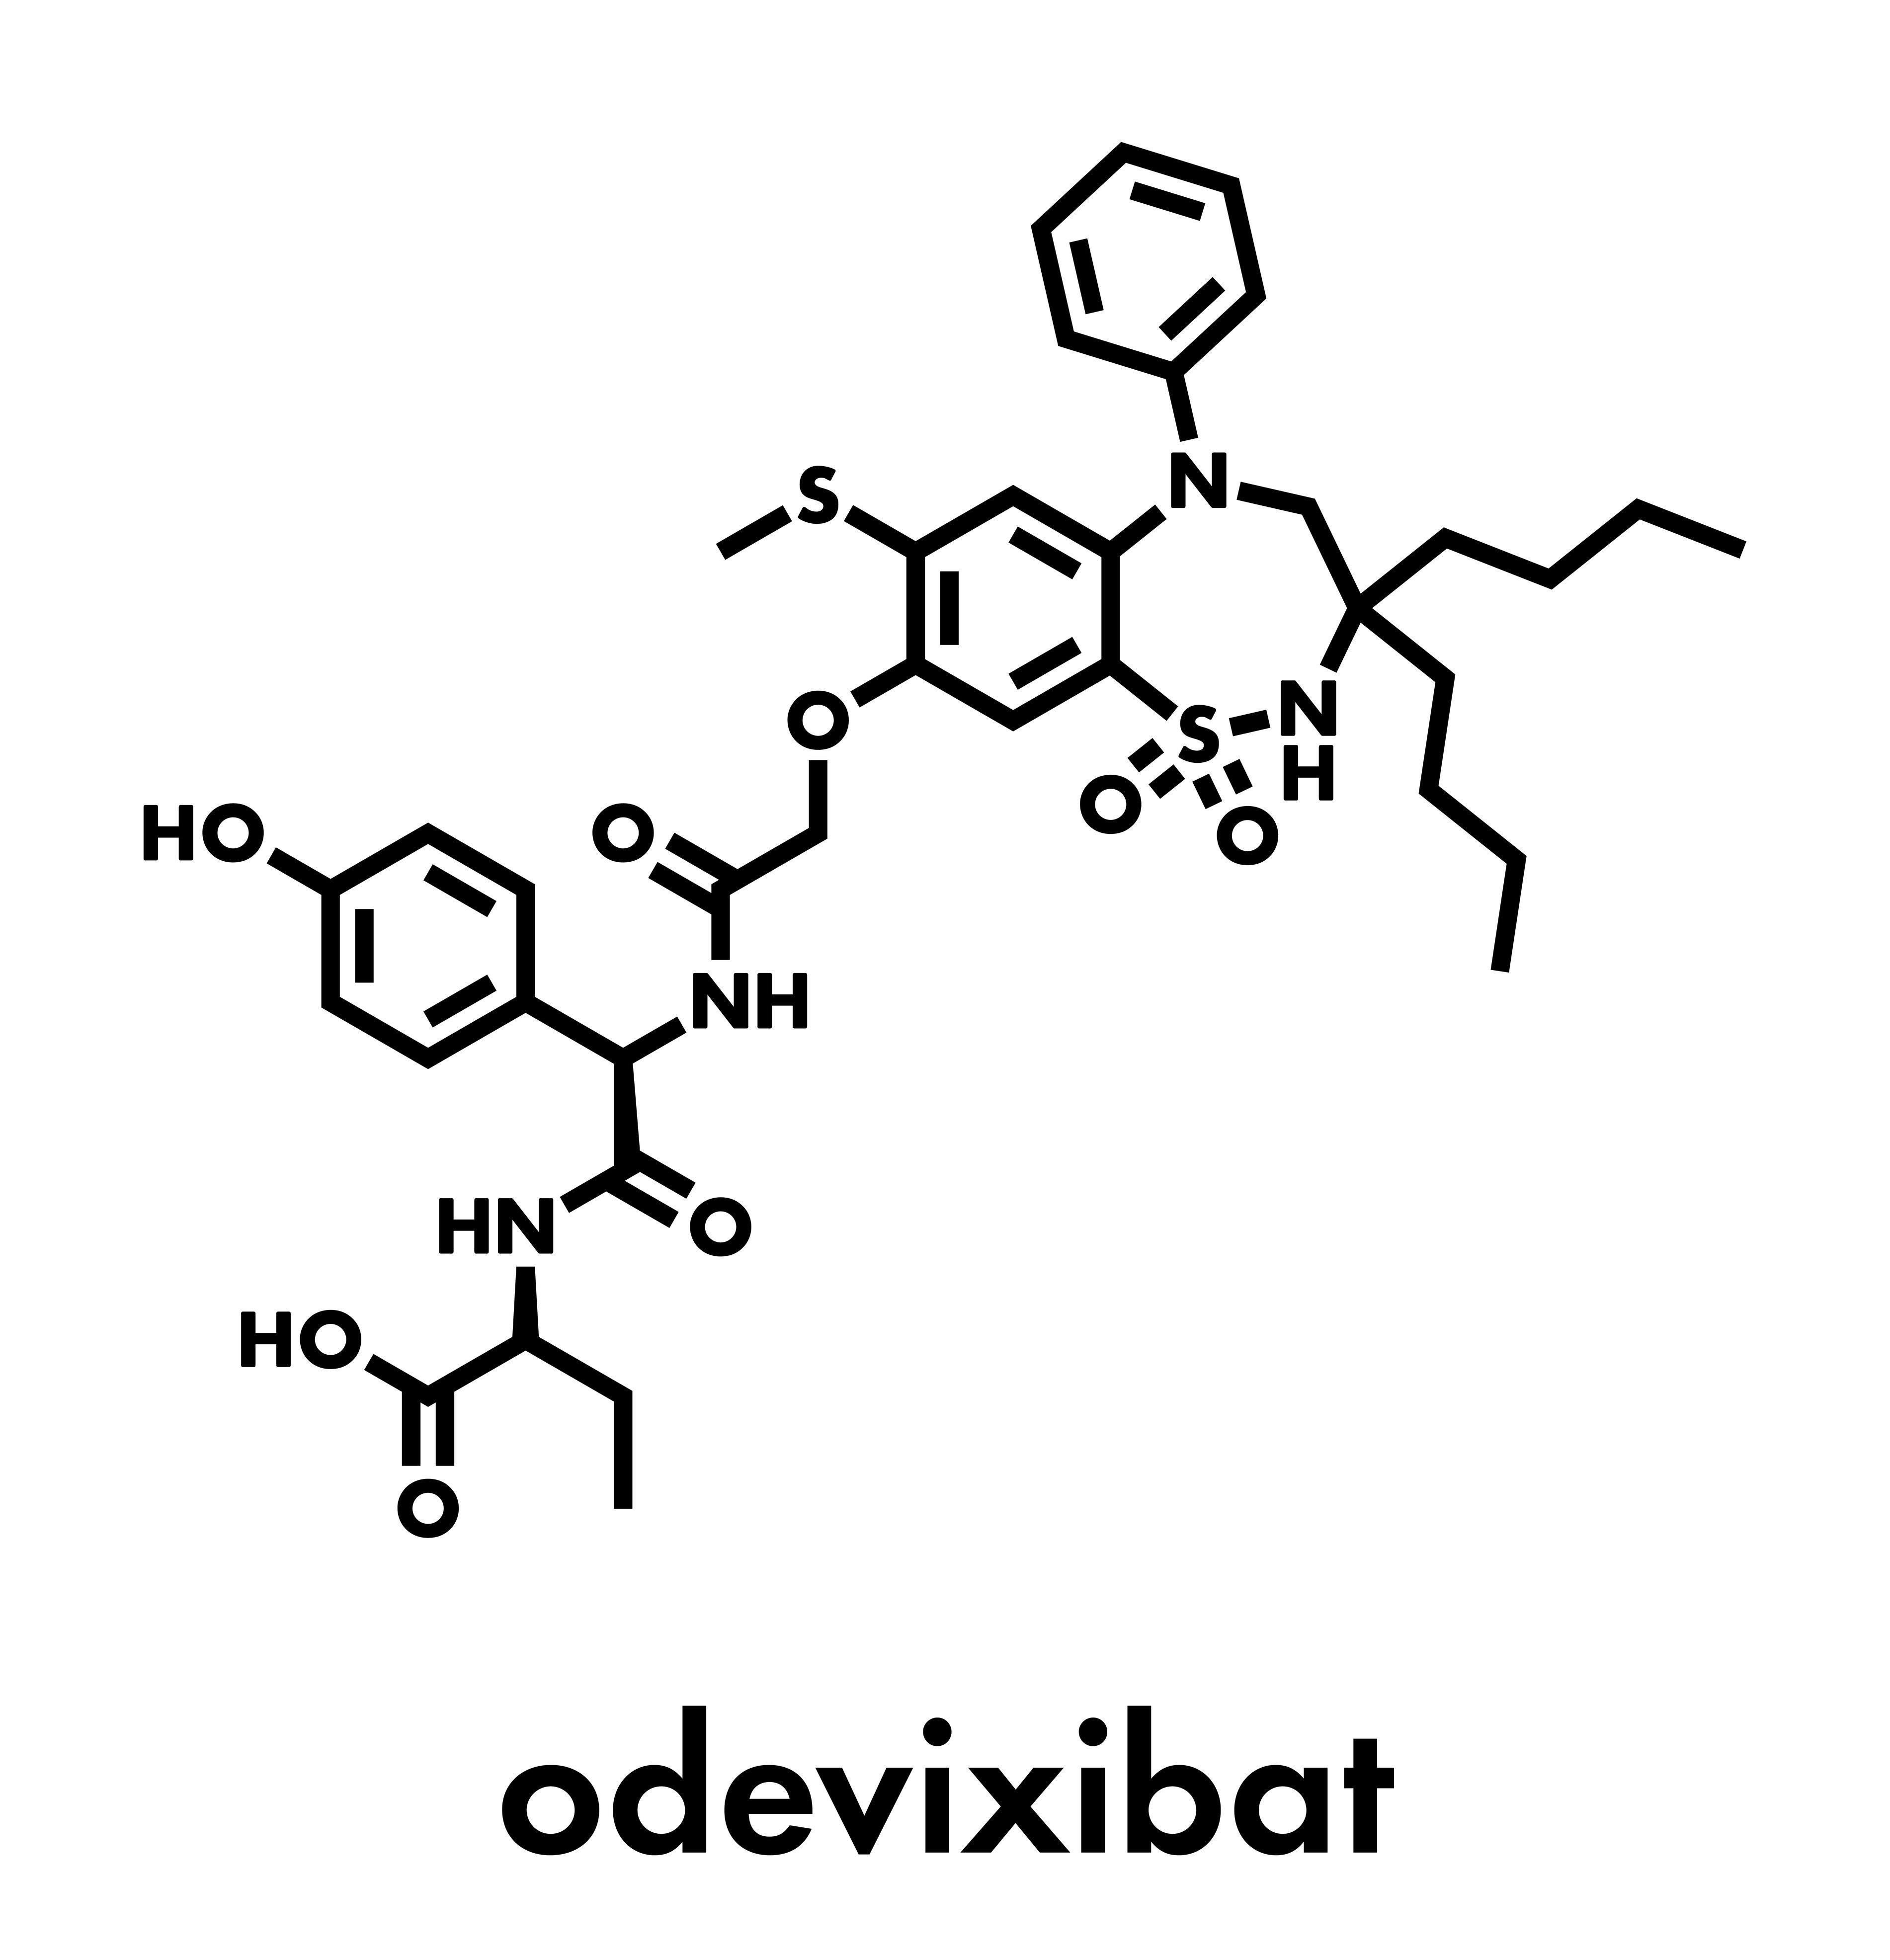 Odevixibat drug molecule. Skeletal formula | molekuul.be - stock.adobe.com